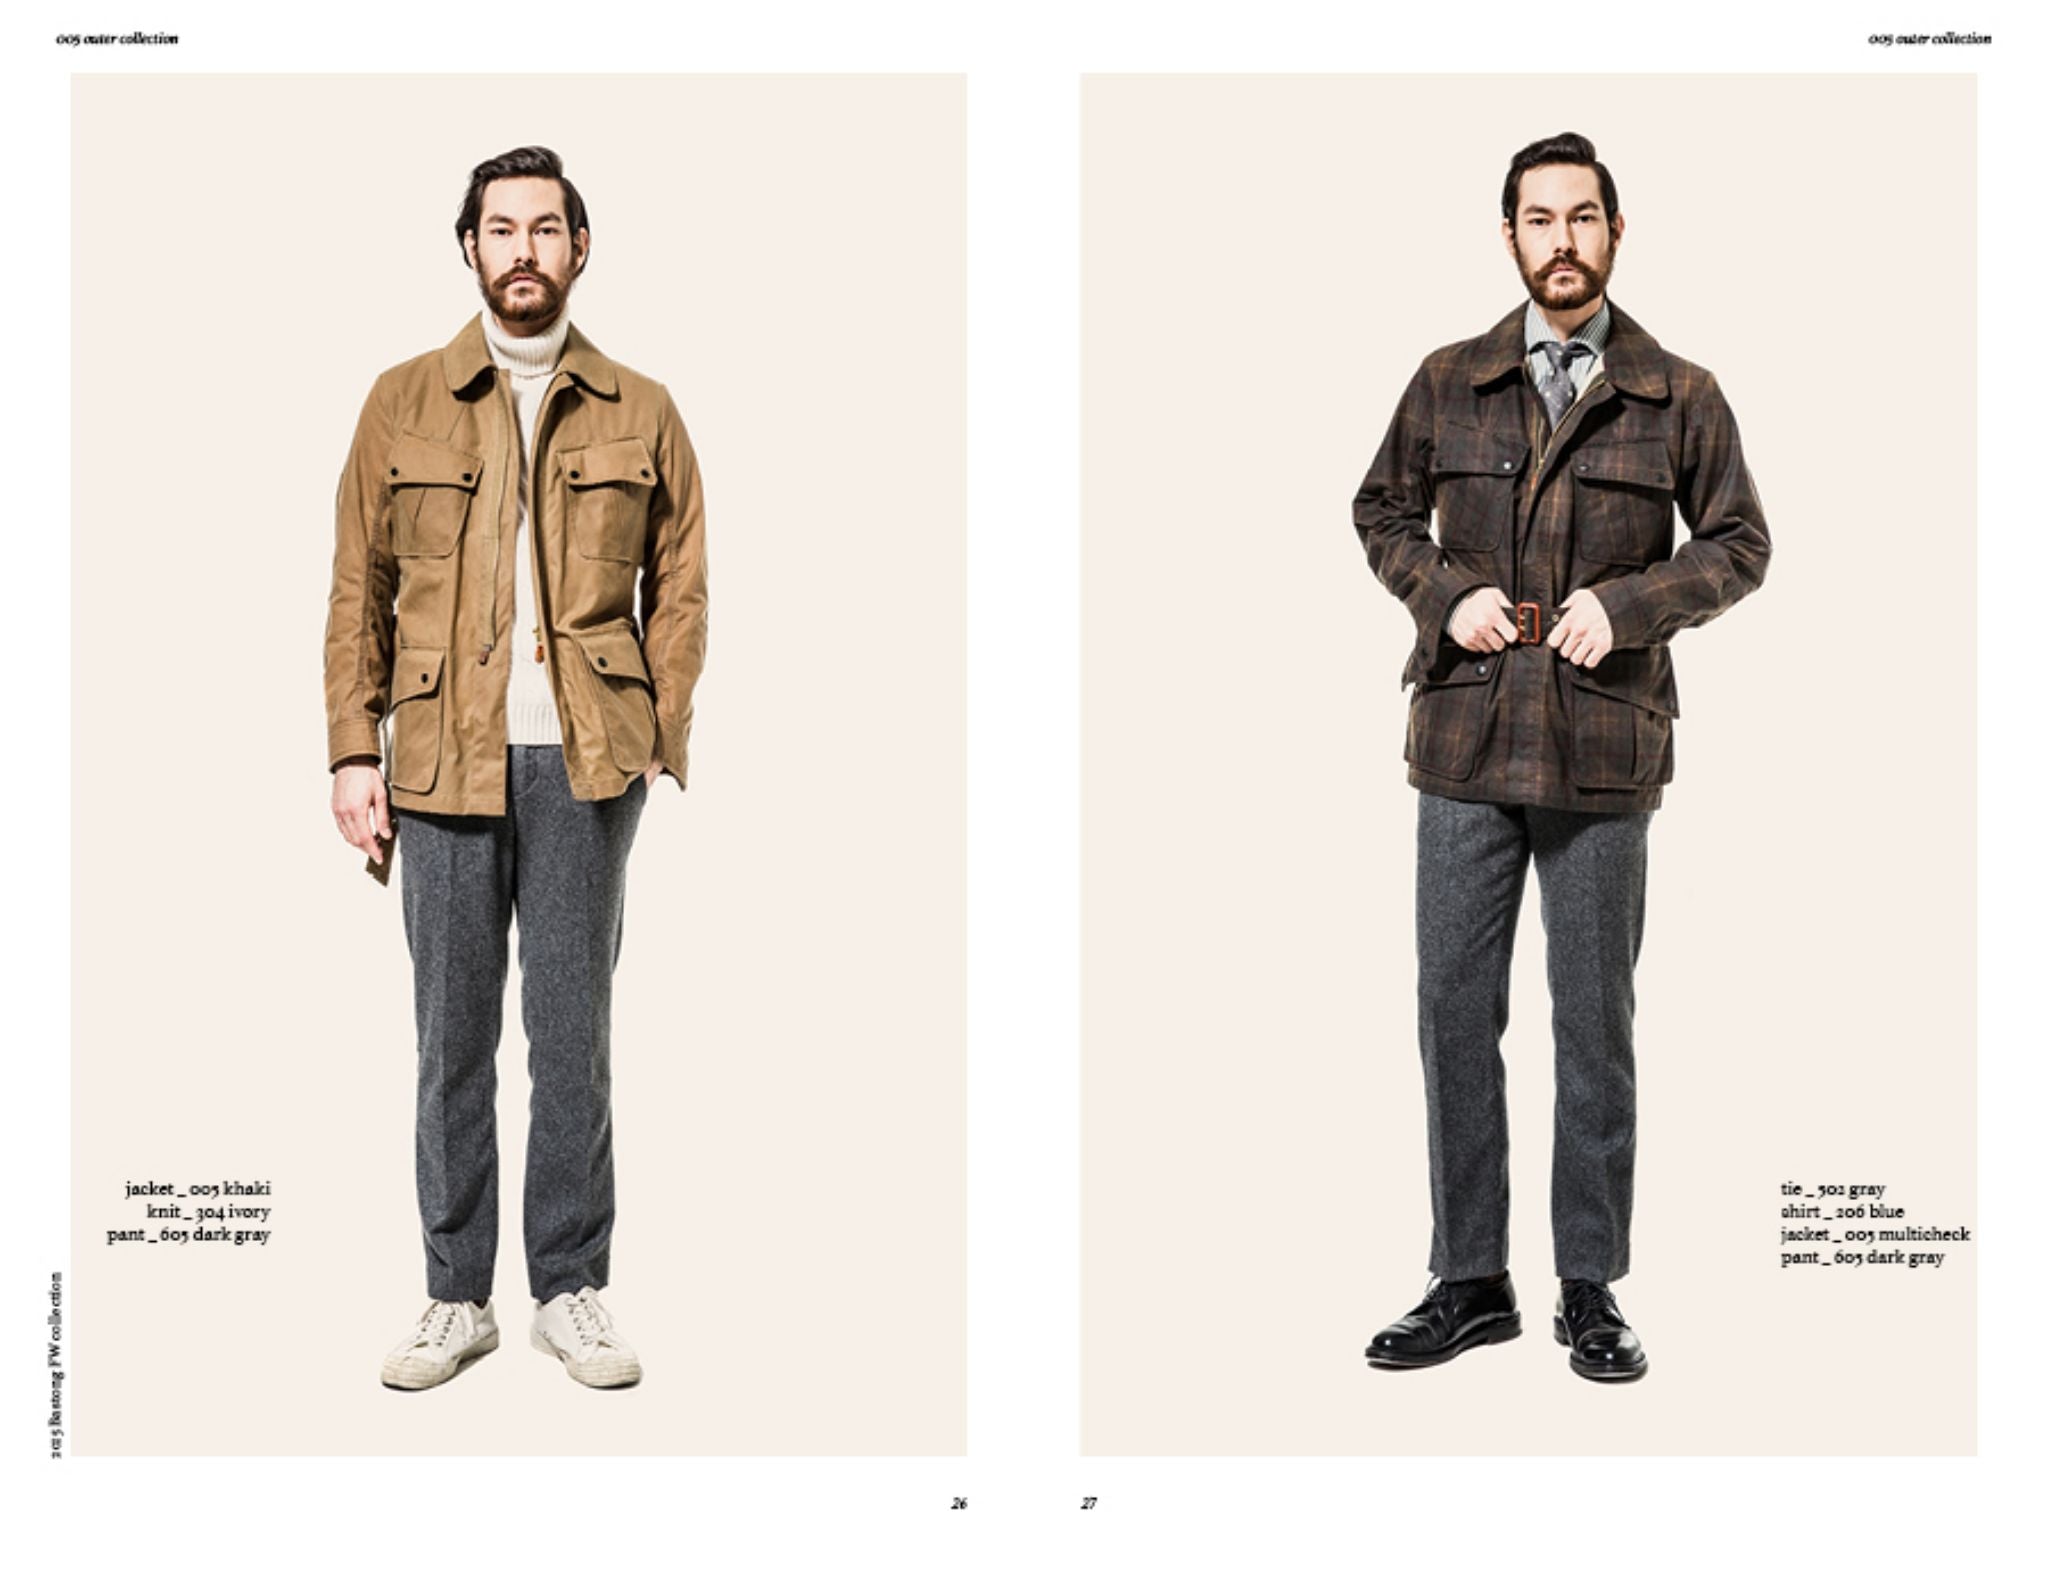 Bastong fw15 lookbook - Flannel slacks combined in different ways